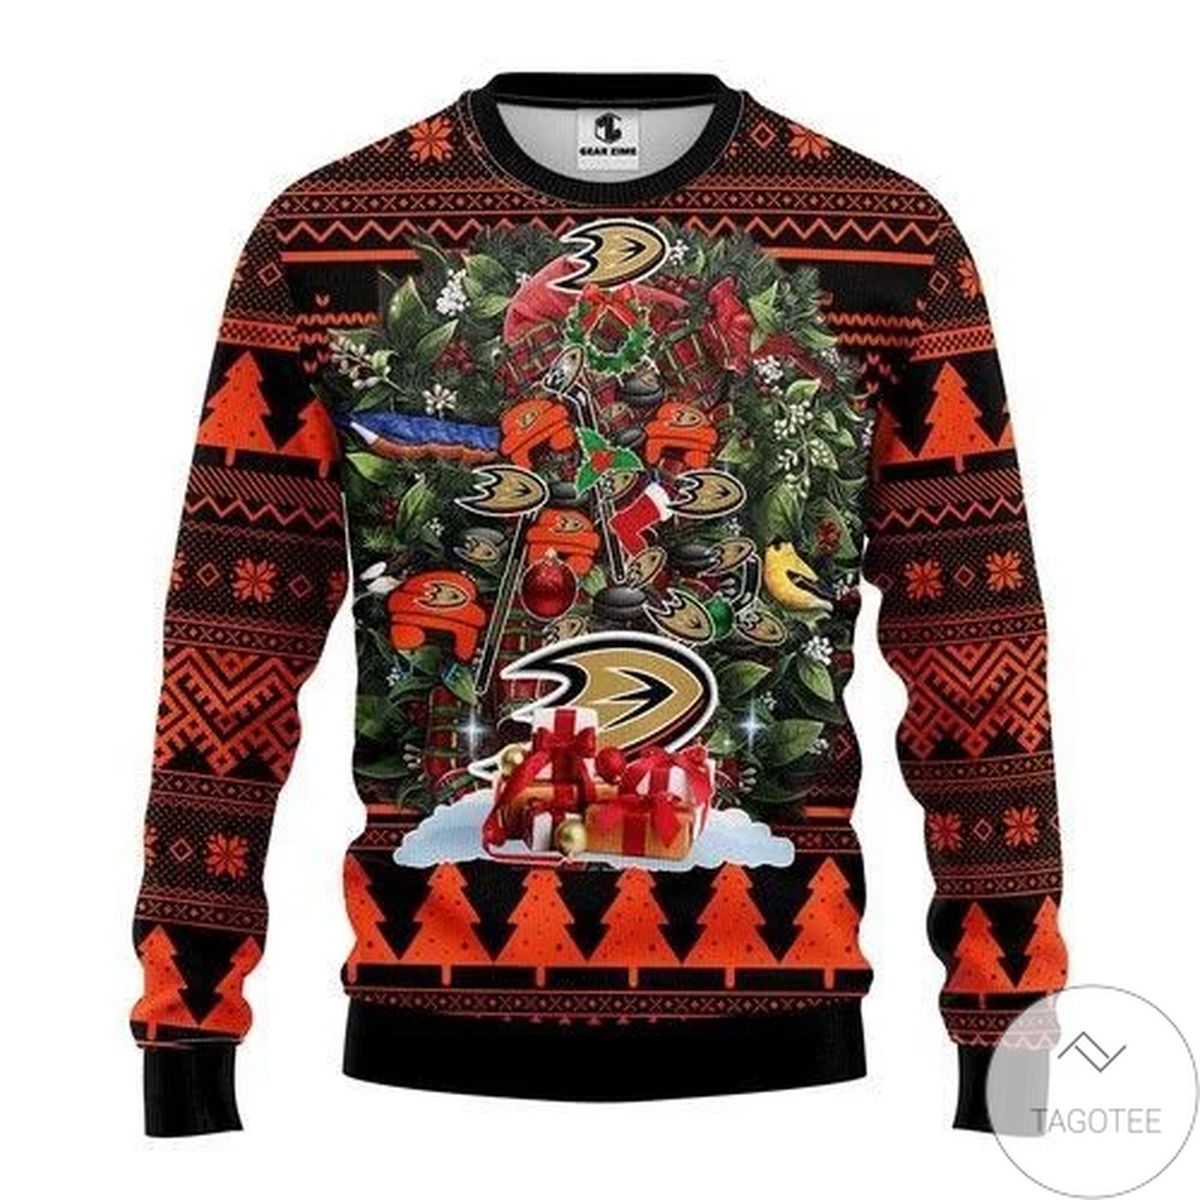 Nhl Anaheim Ducks Tree Christmas Ugly Christmas Sweater